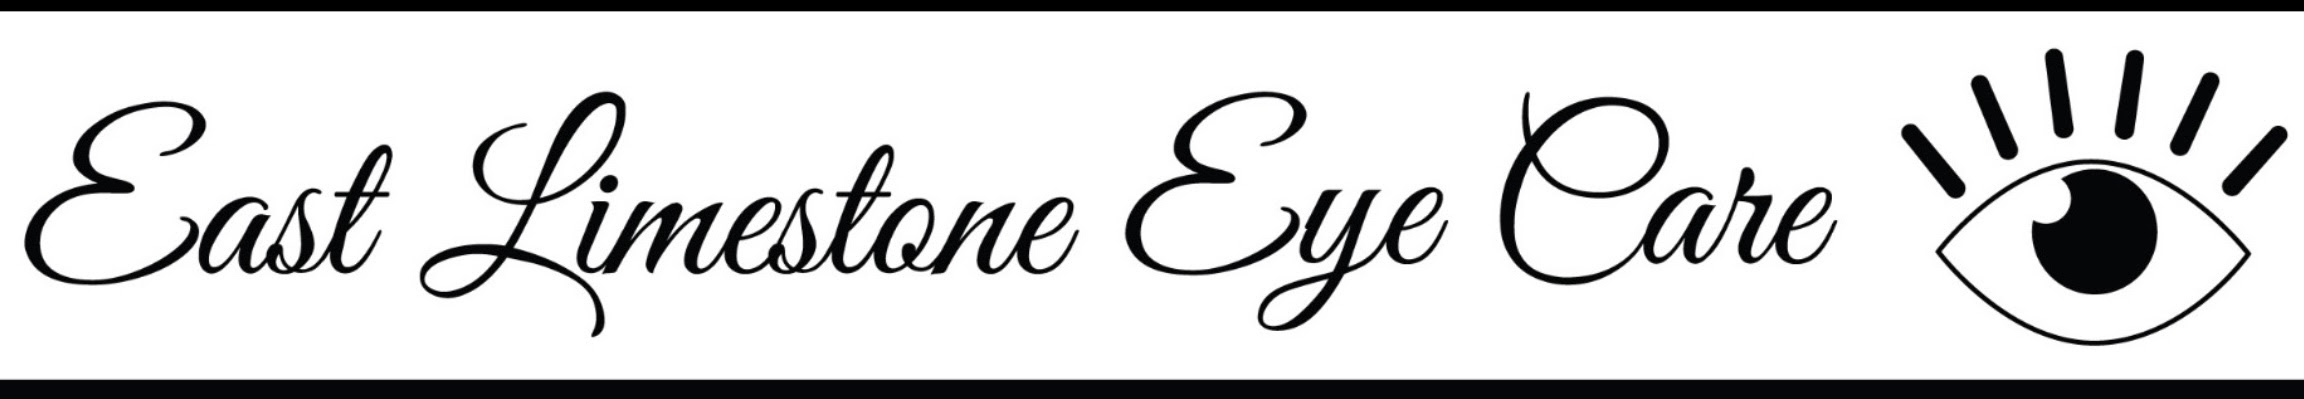 East Limestone Eye Care